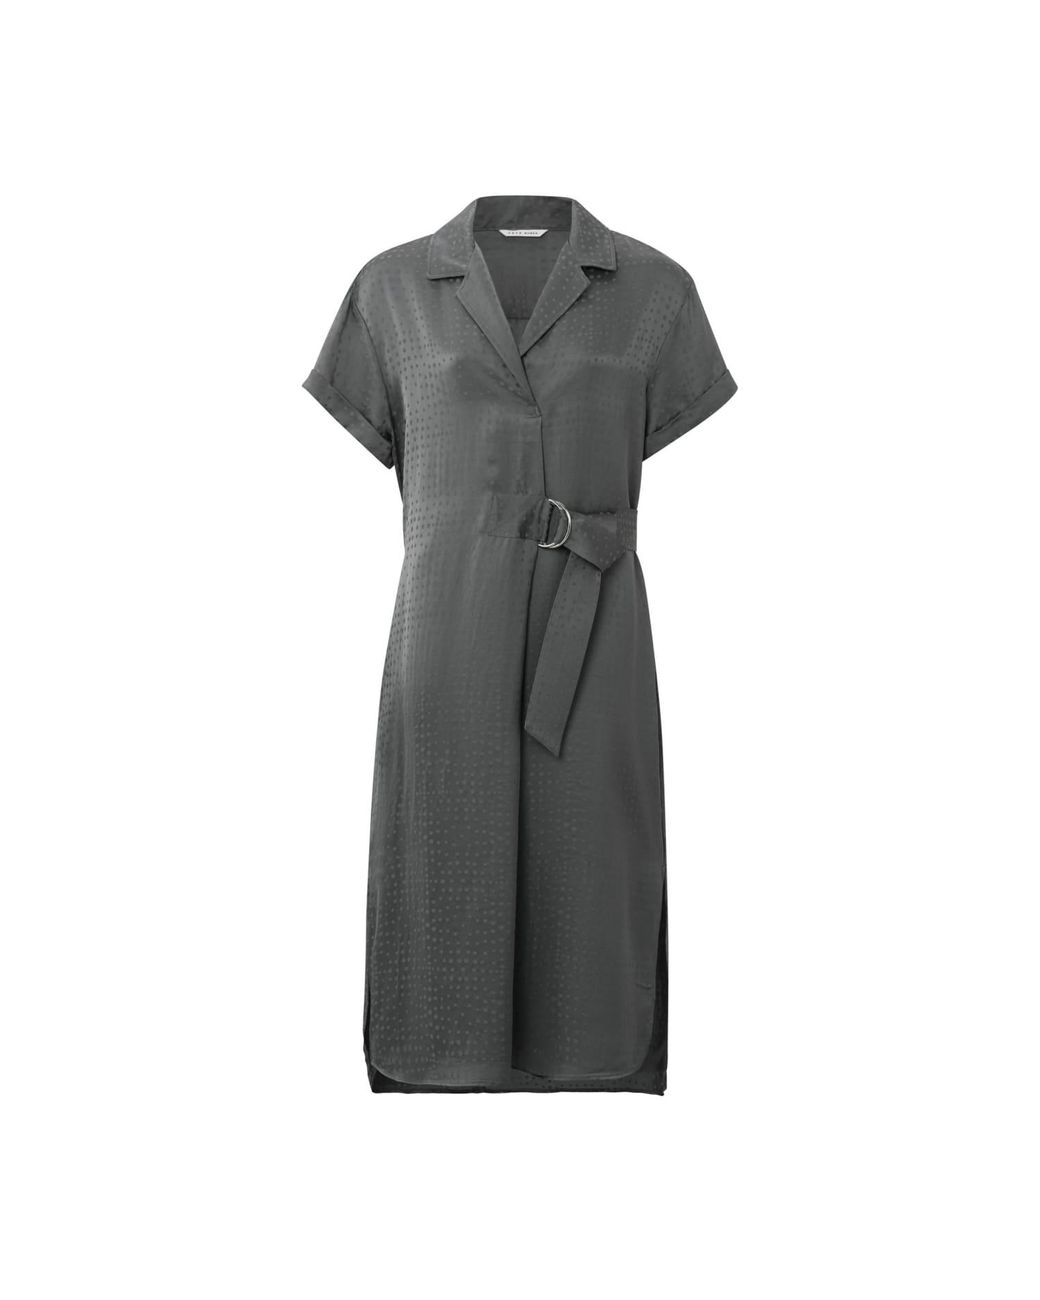 Yaya Magnet Grey Dress With V Neckline And Polka Dot Pattern in Gray | Lyst